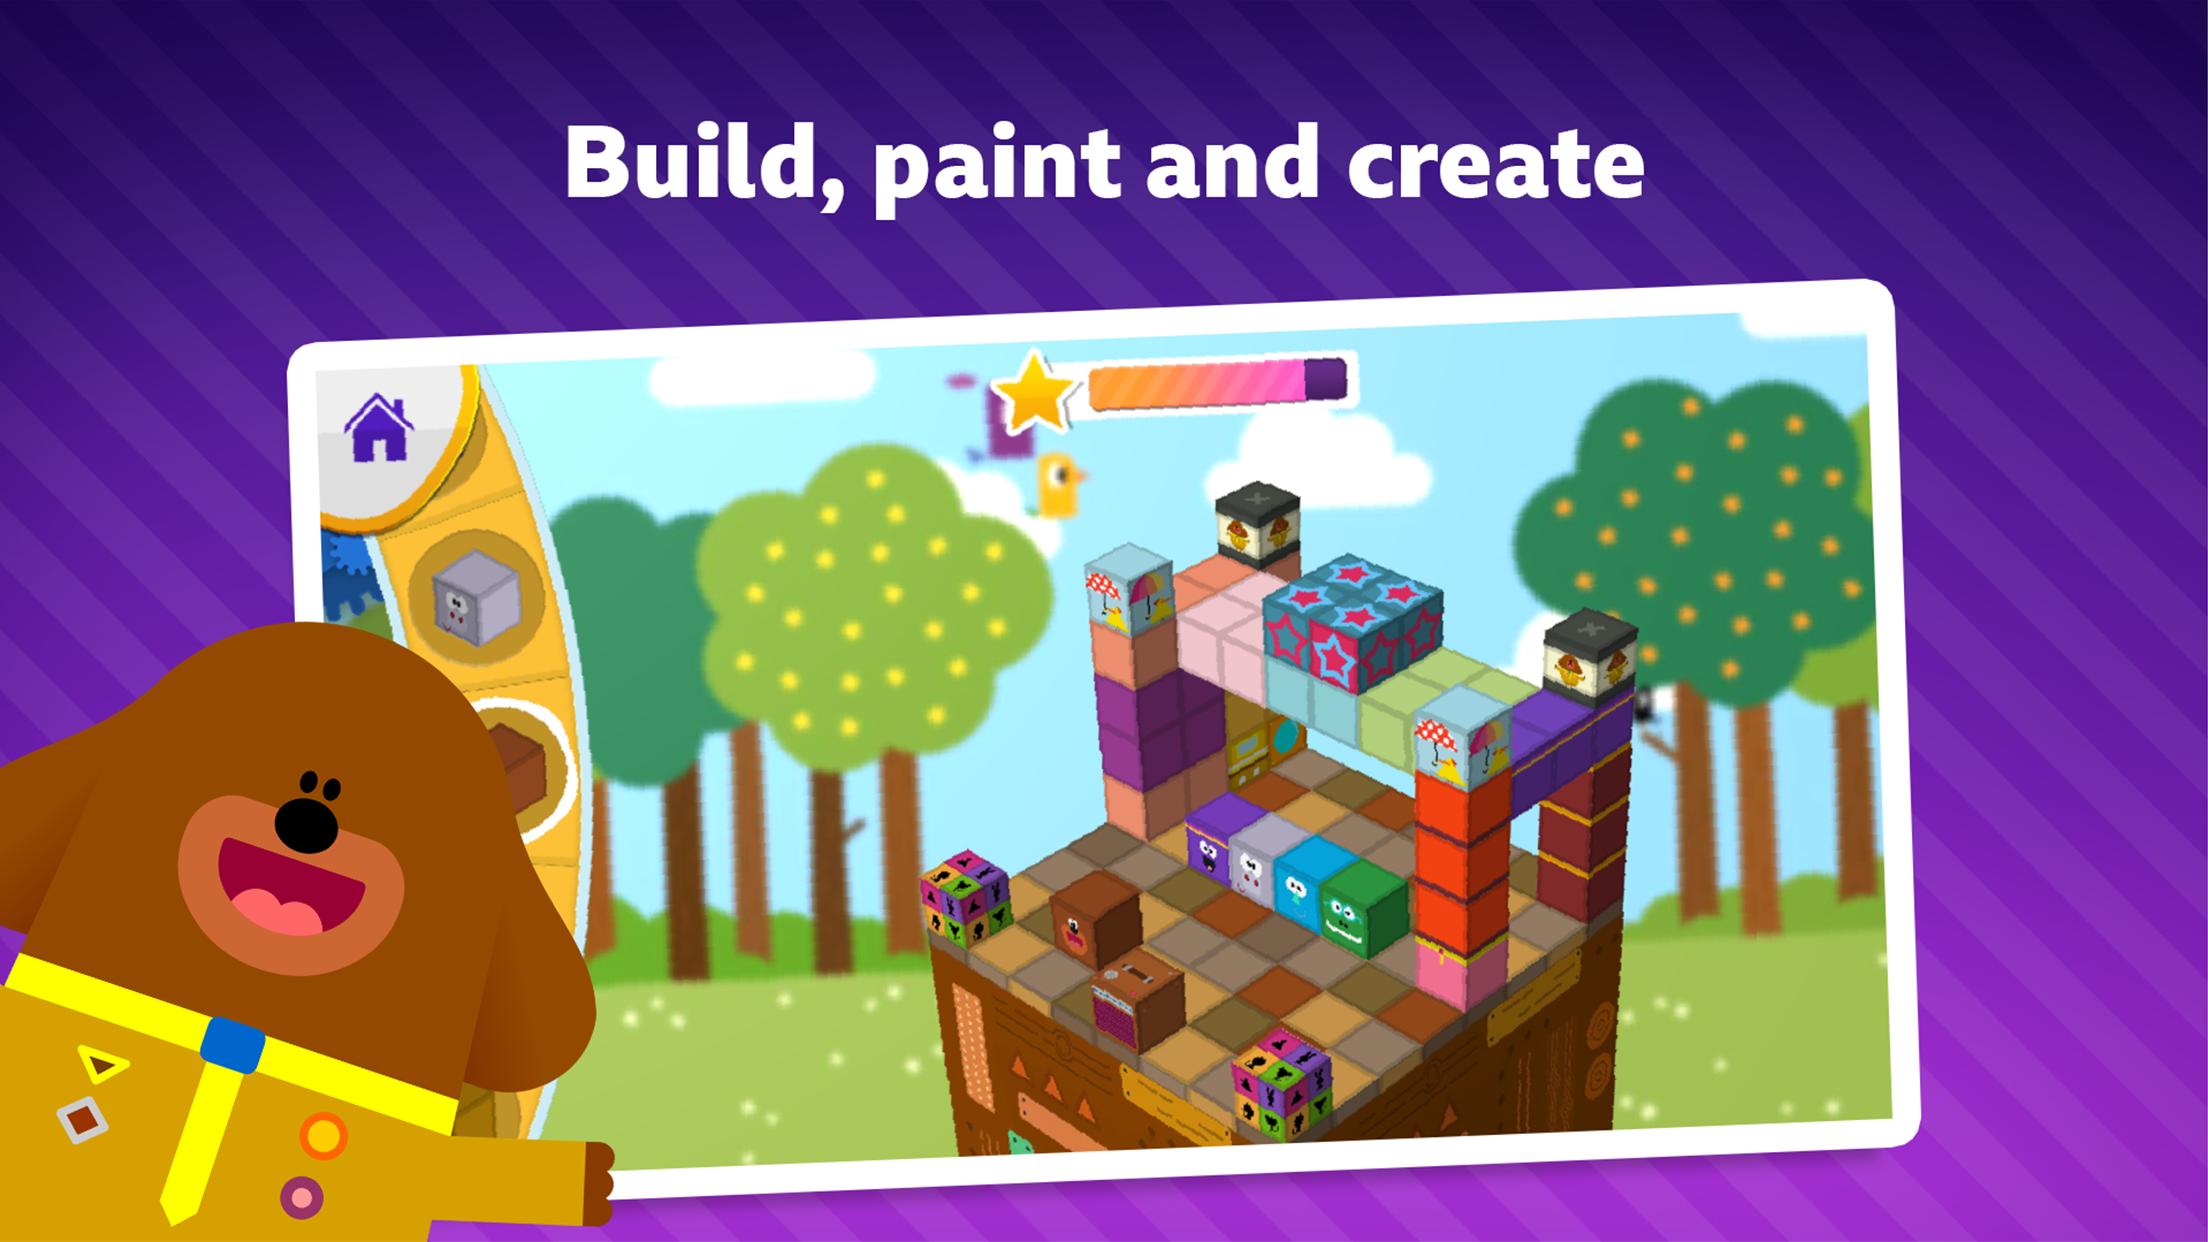 BBC CBeebies Get Creative - Build, paint and play! 1.16.0 Screenshot 2